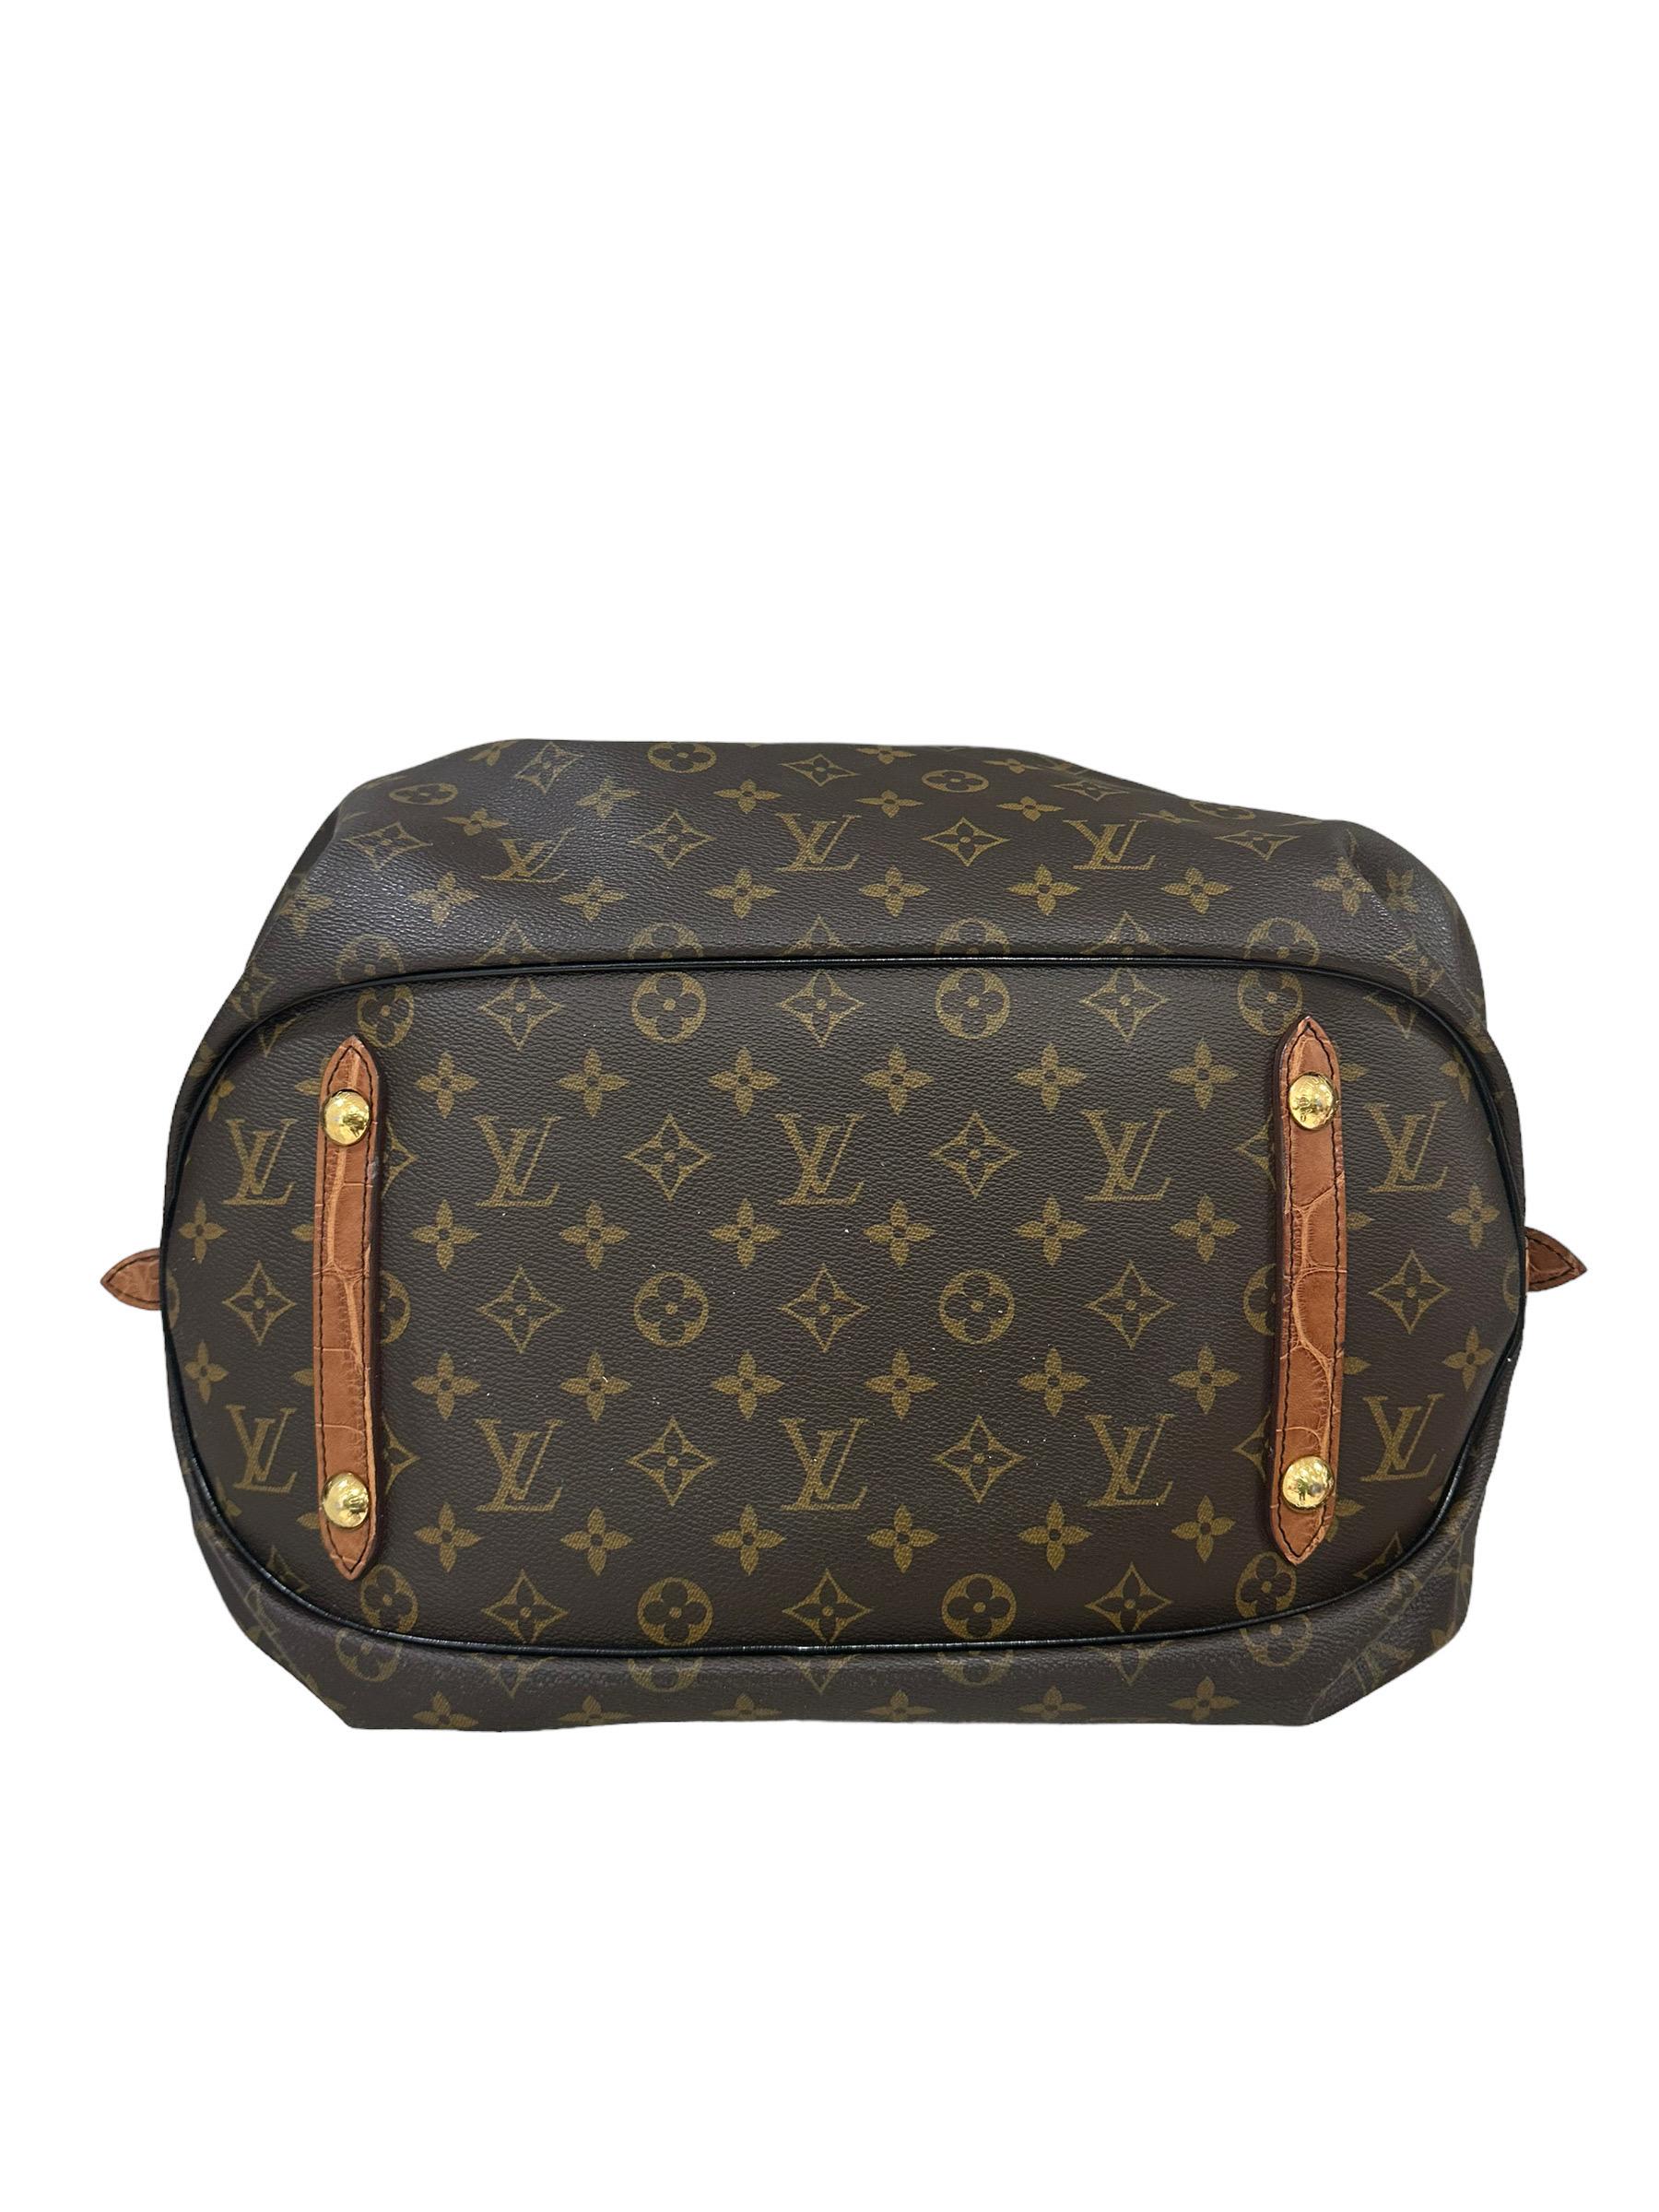 2009 Louis Vuitton Surya Monogram Hobo Bag Leather Limited Edition  6